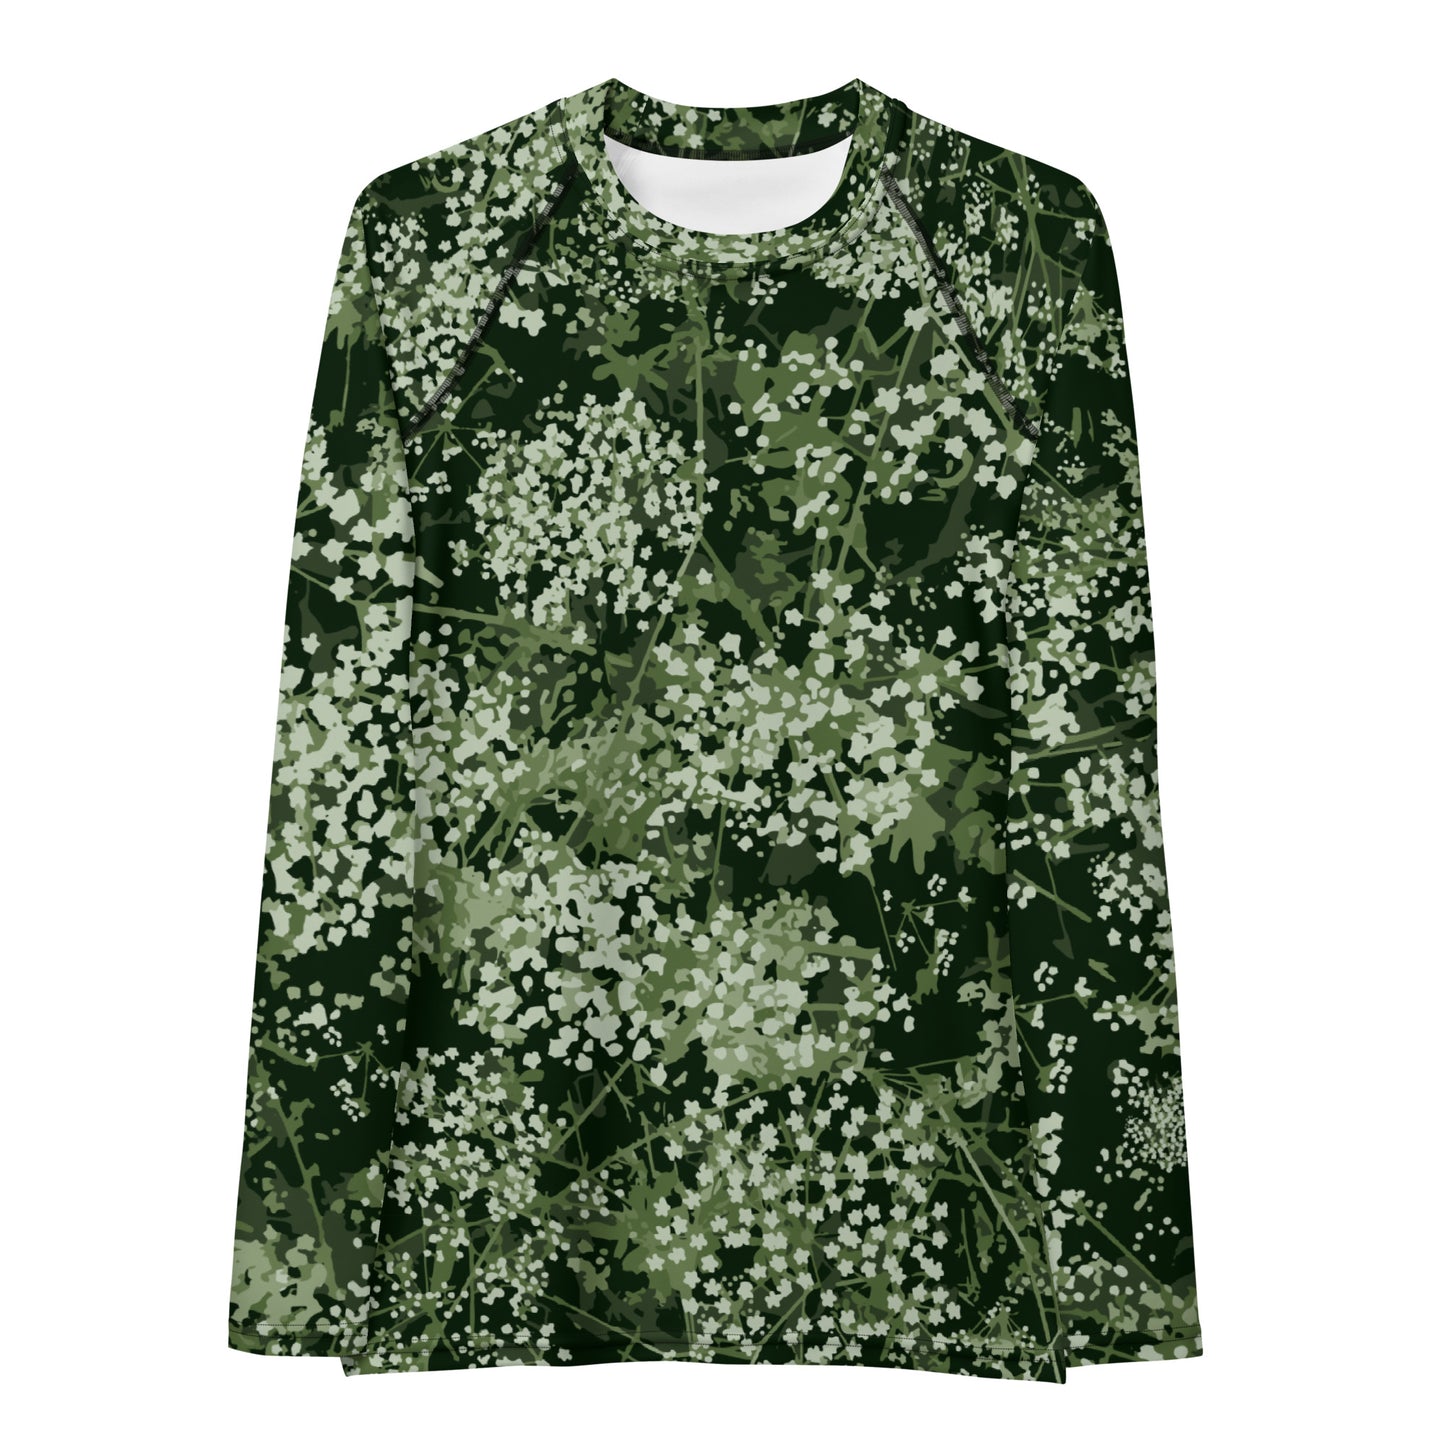 Valkovuokko - Long sleeve activewear shirt - Long Sleeve- Print N Stuff - [designed in Turku Finland]